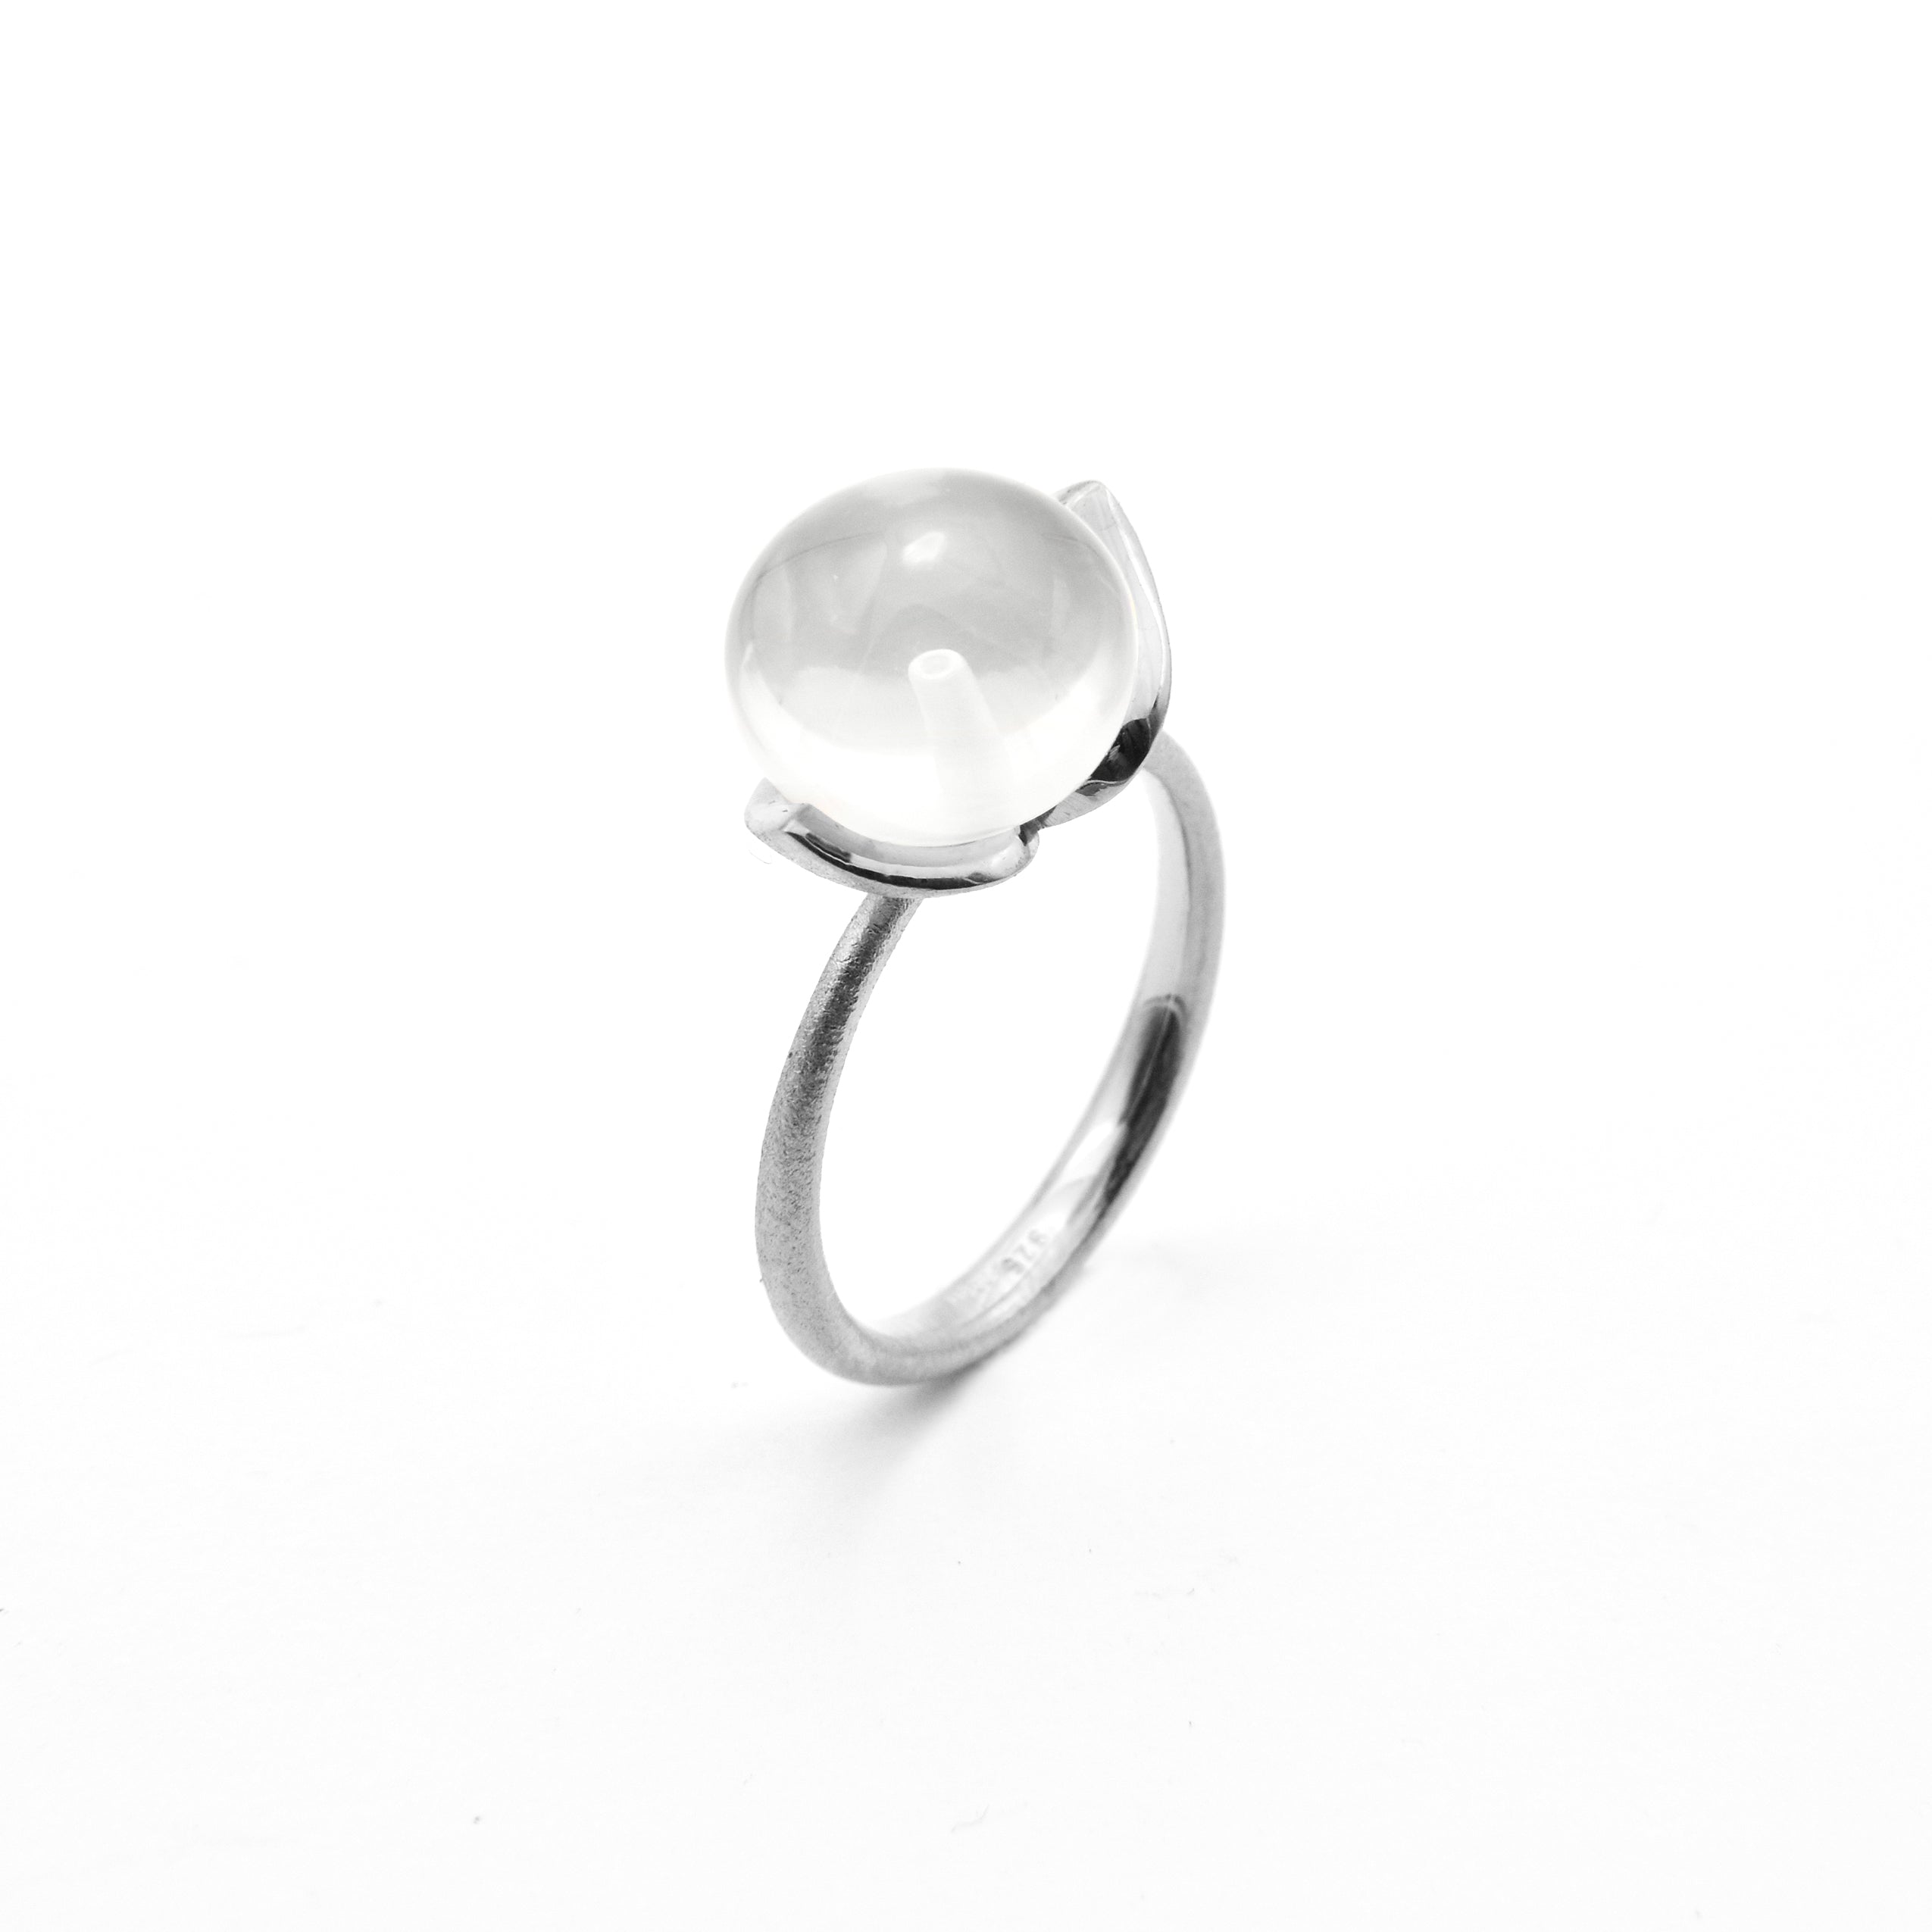 Dolce ring "medium" with milky quartz 925/-